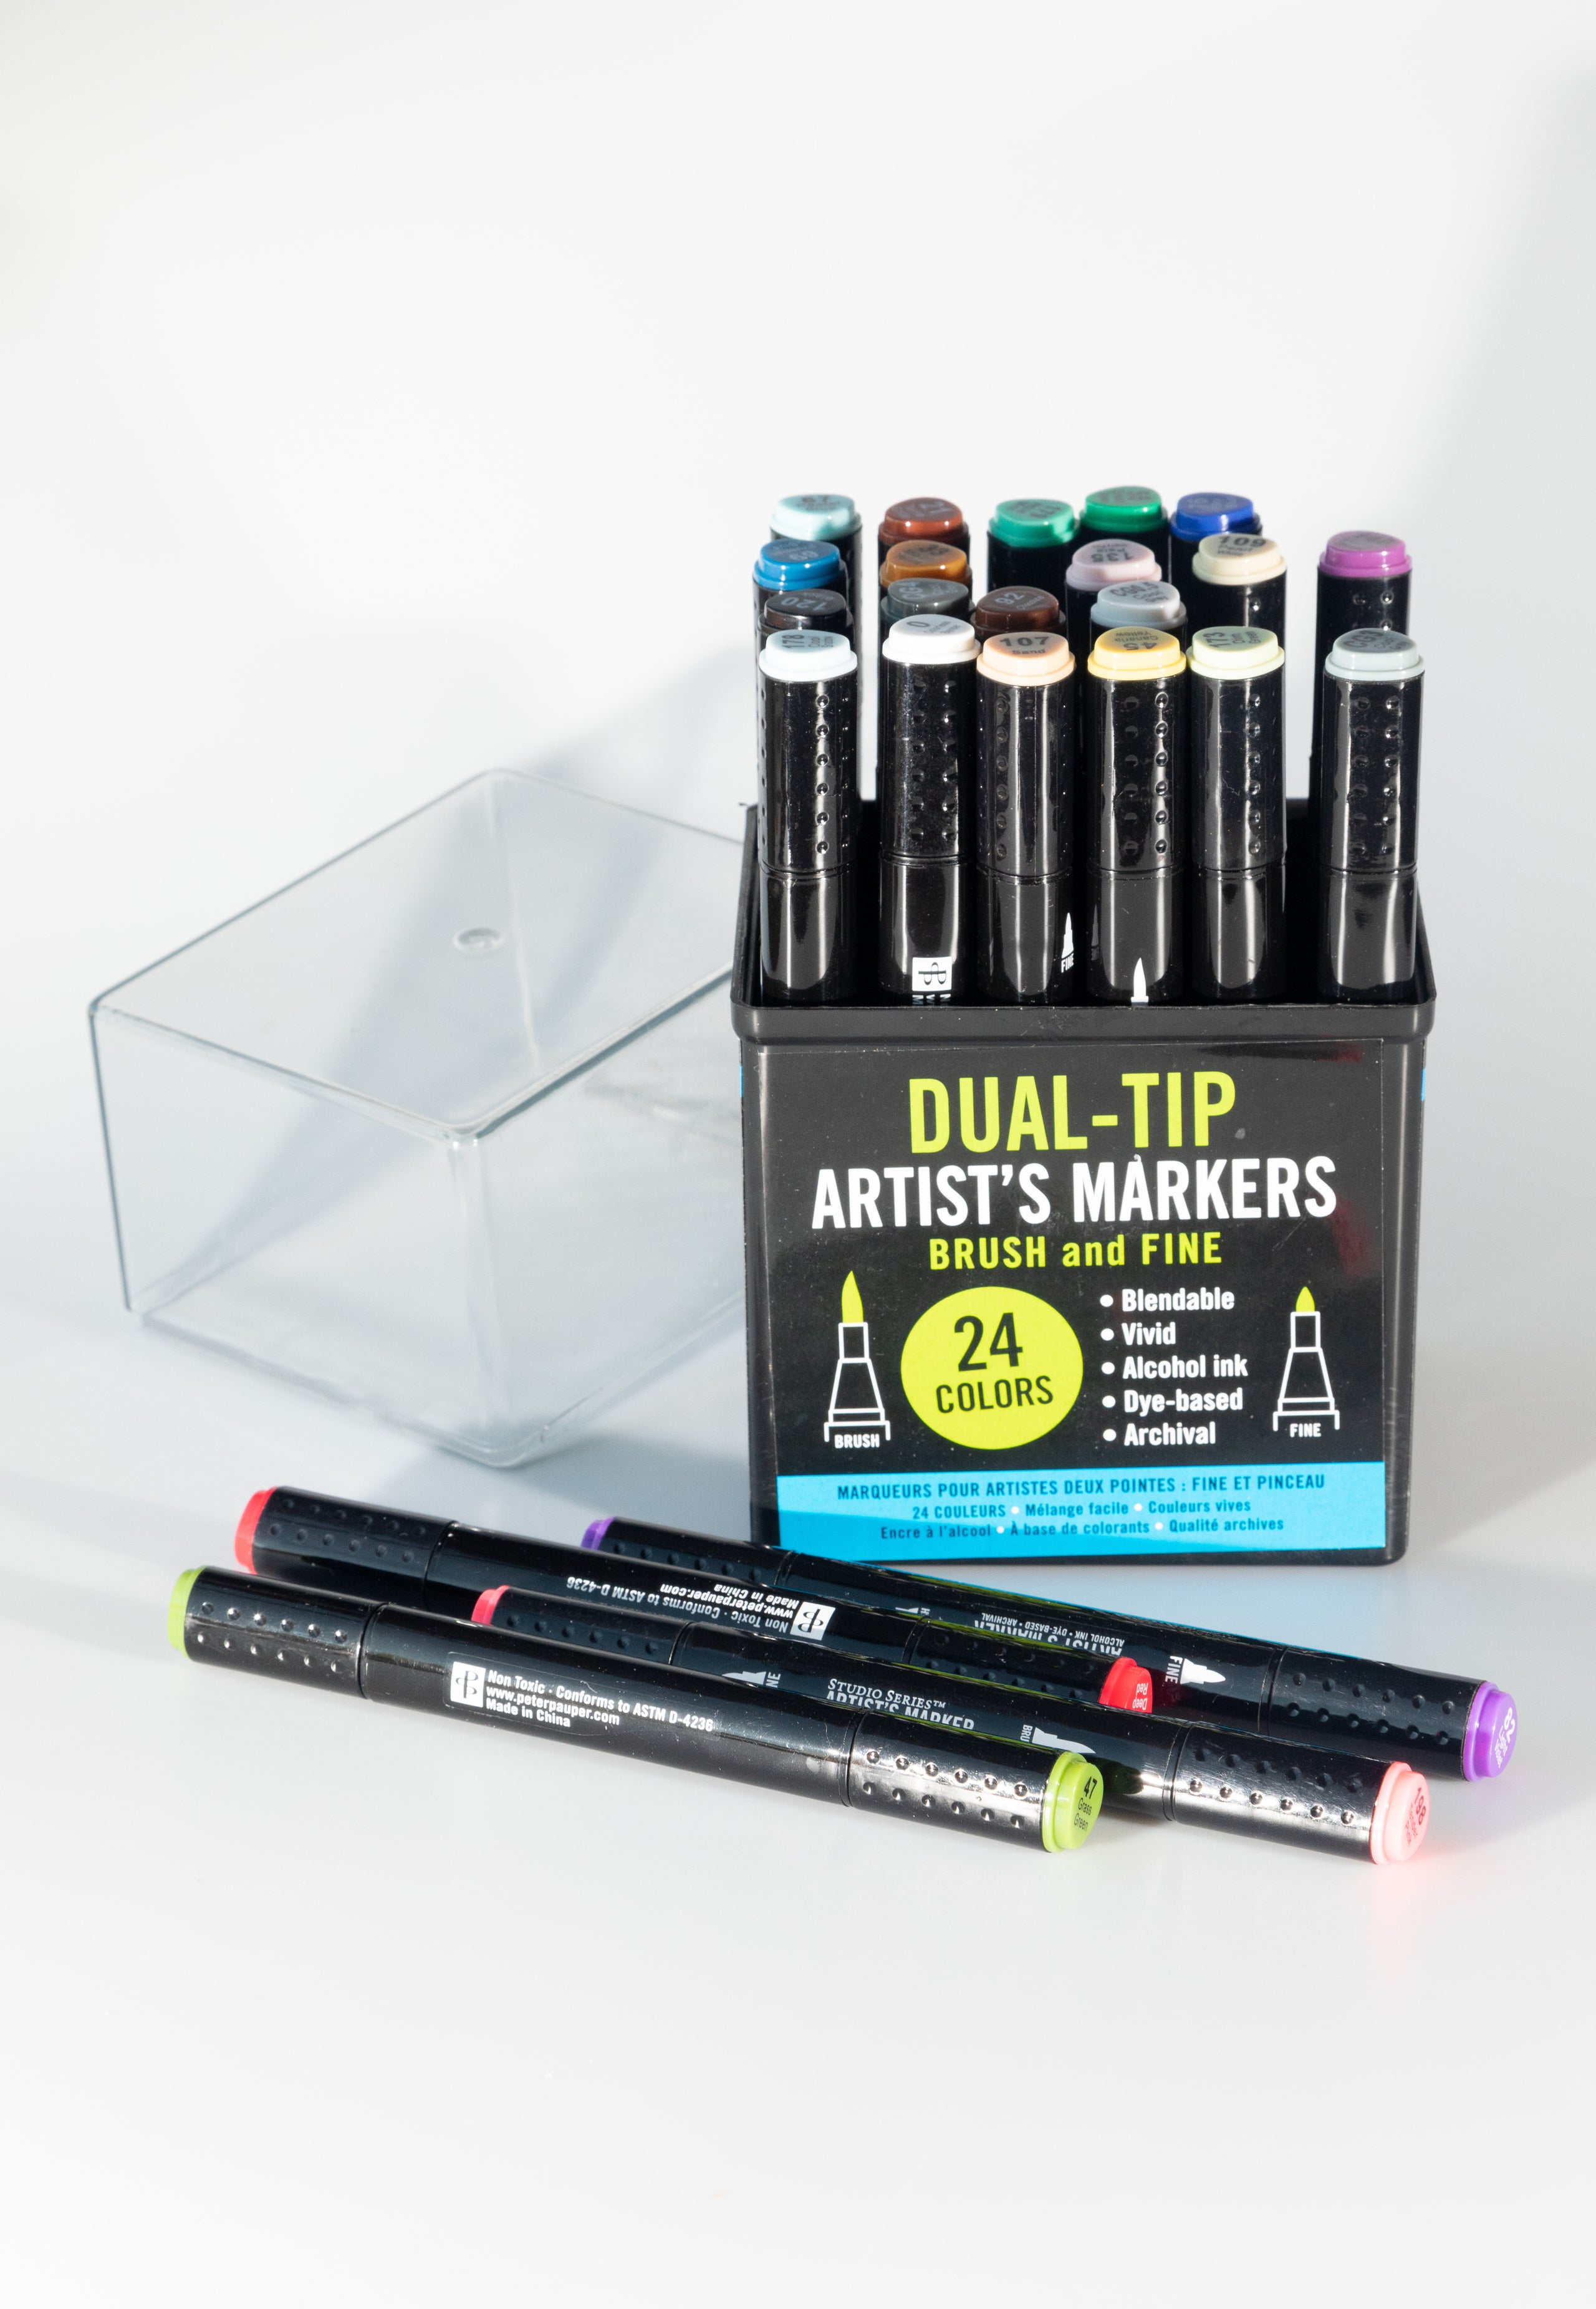 Studio Series Dual-Tip Artist's Markers - Set of 24 by Peter Pauper